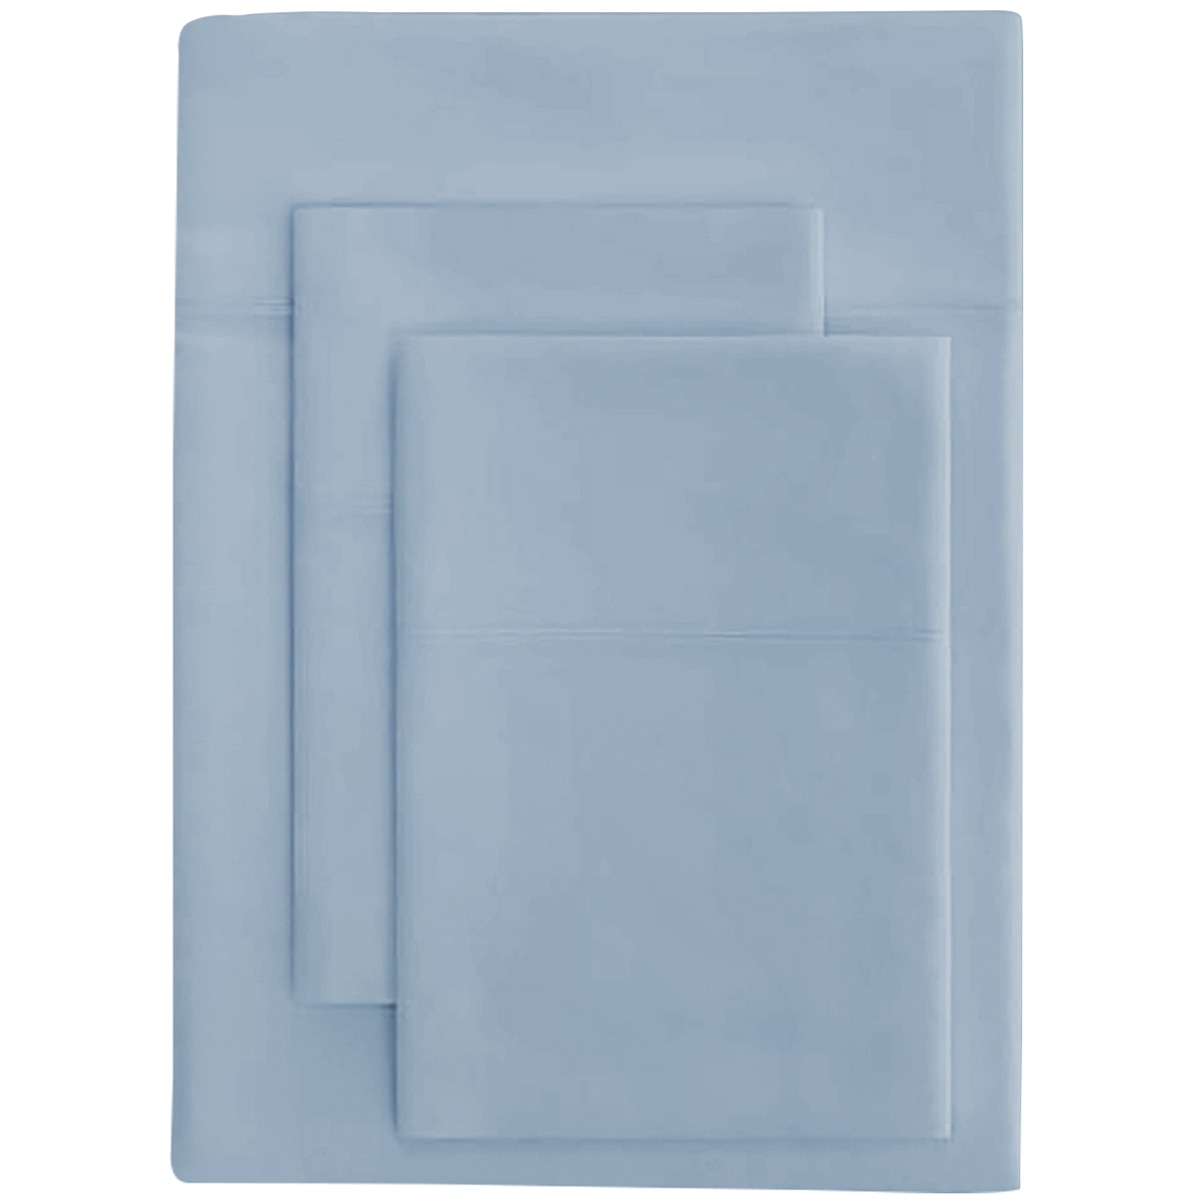 Bdirect Royal Comfort - Balmain 1000TC Bamboo cotton Quilt Cover Sets (King) - Blue Fog